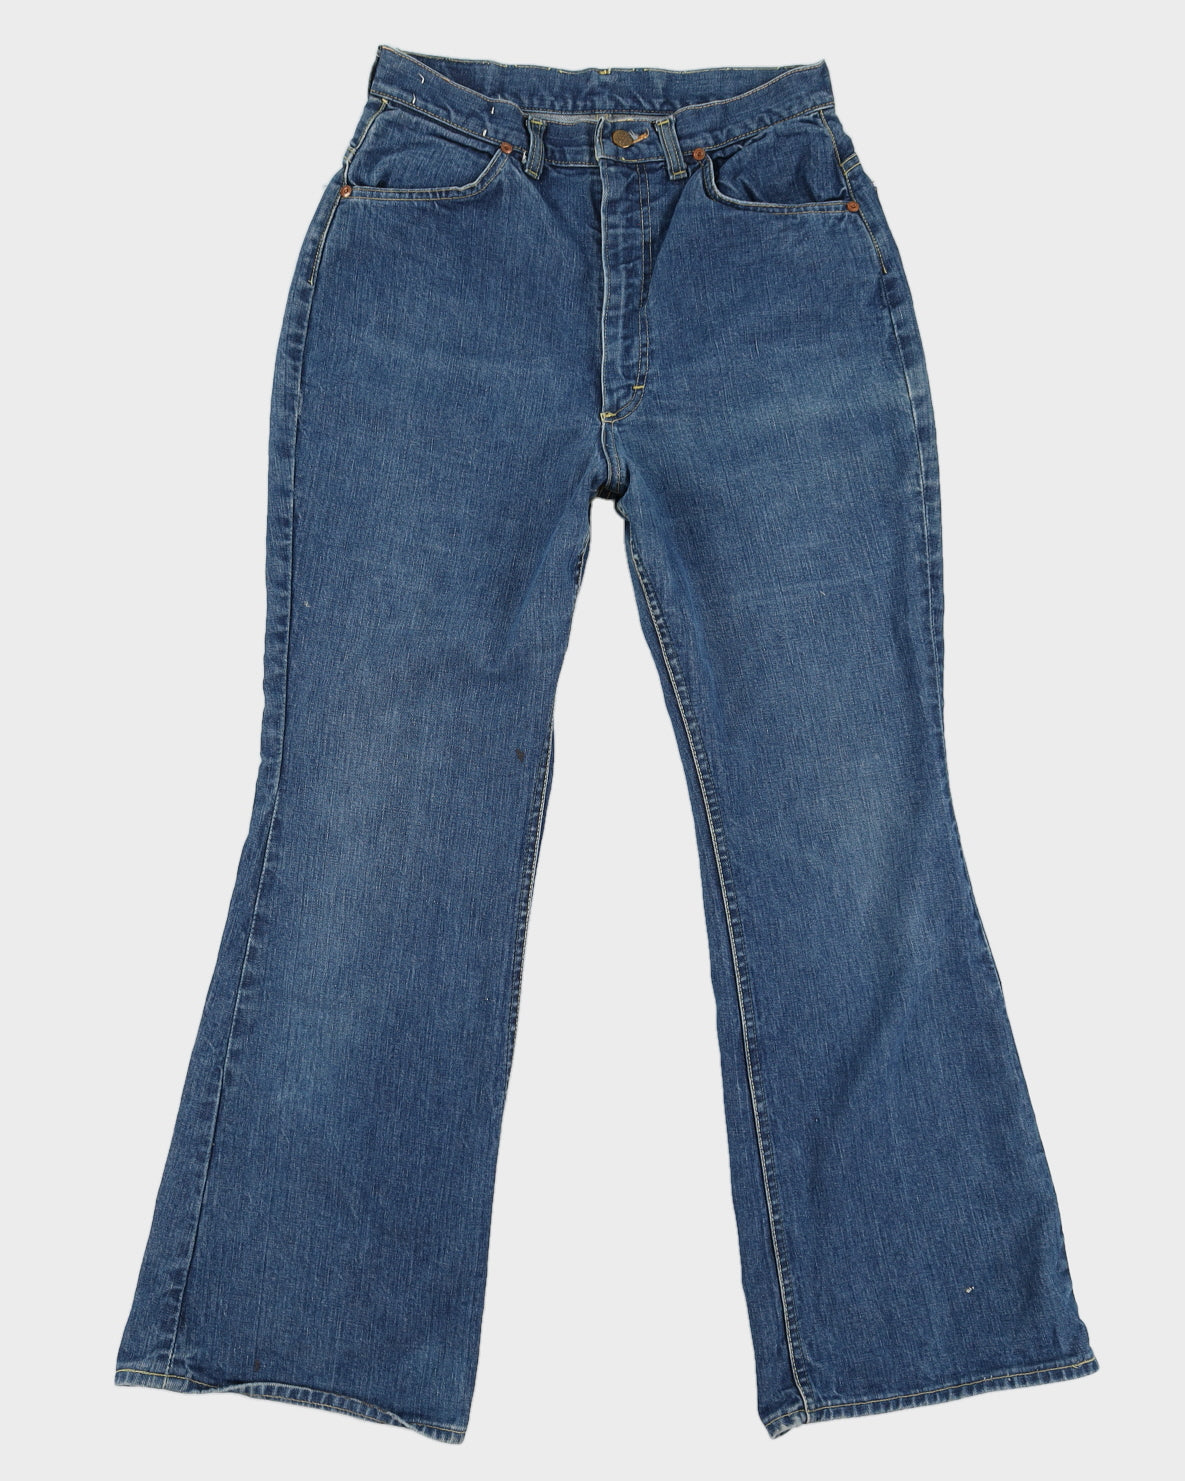 Vintage 70s Lee Medium Wash High Waisted Jeans - W30